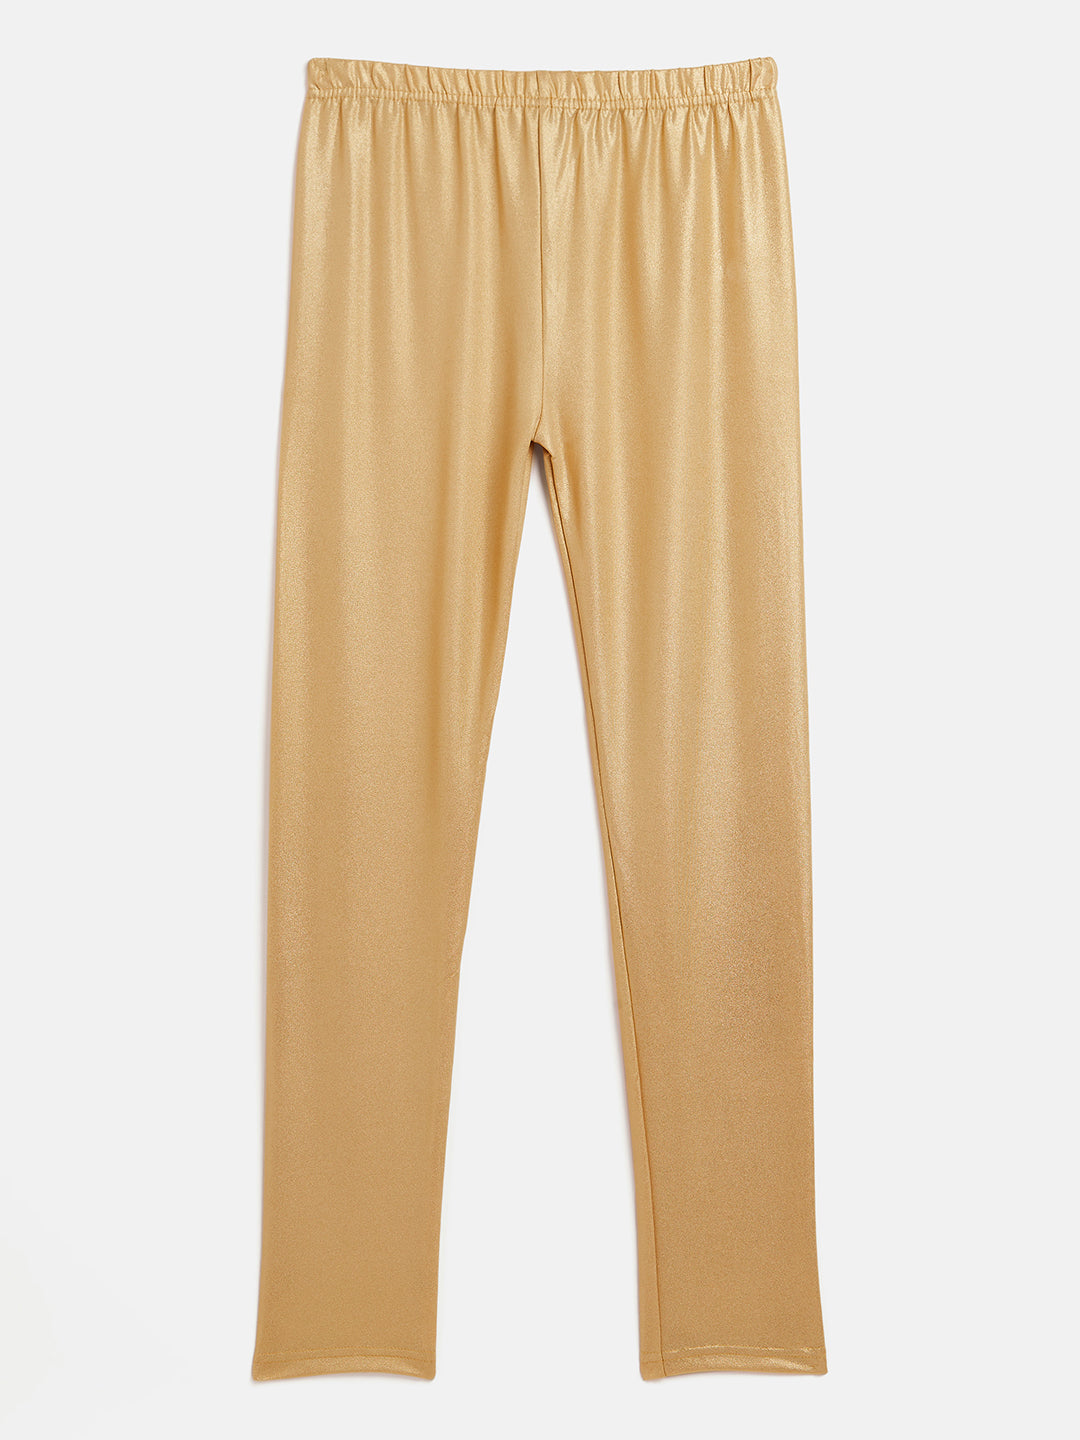 Shimmer medium gold leggings – The Pajama Factory